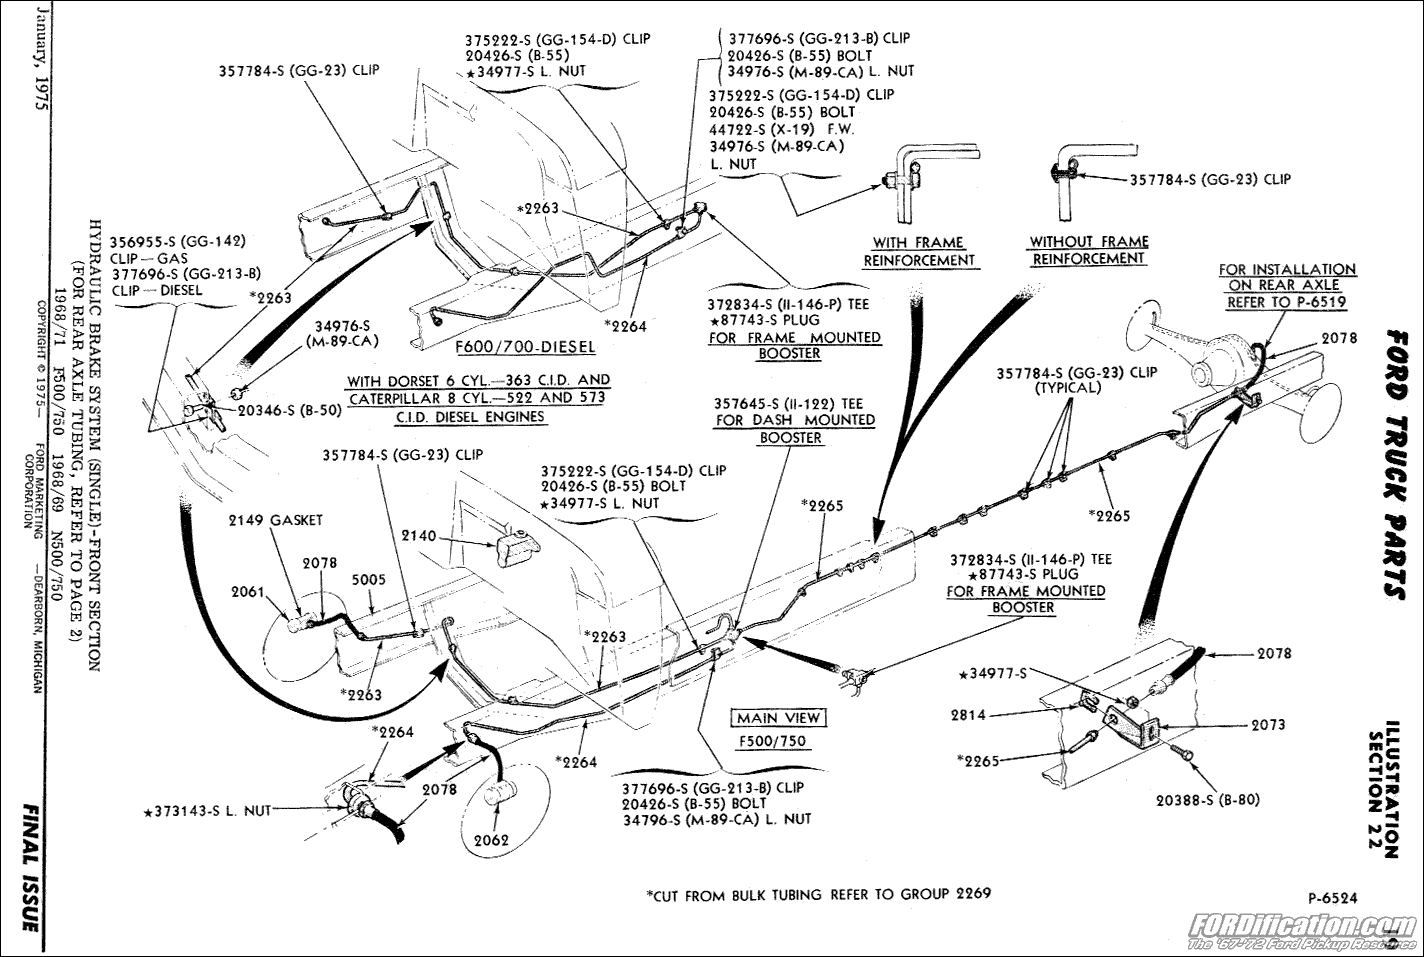 30 Ford F700 Brake System Diagram